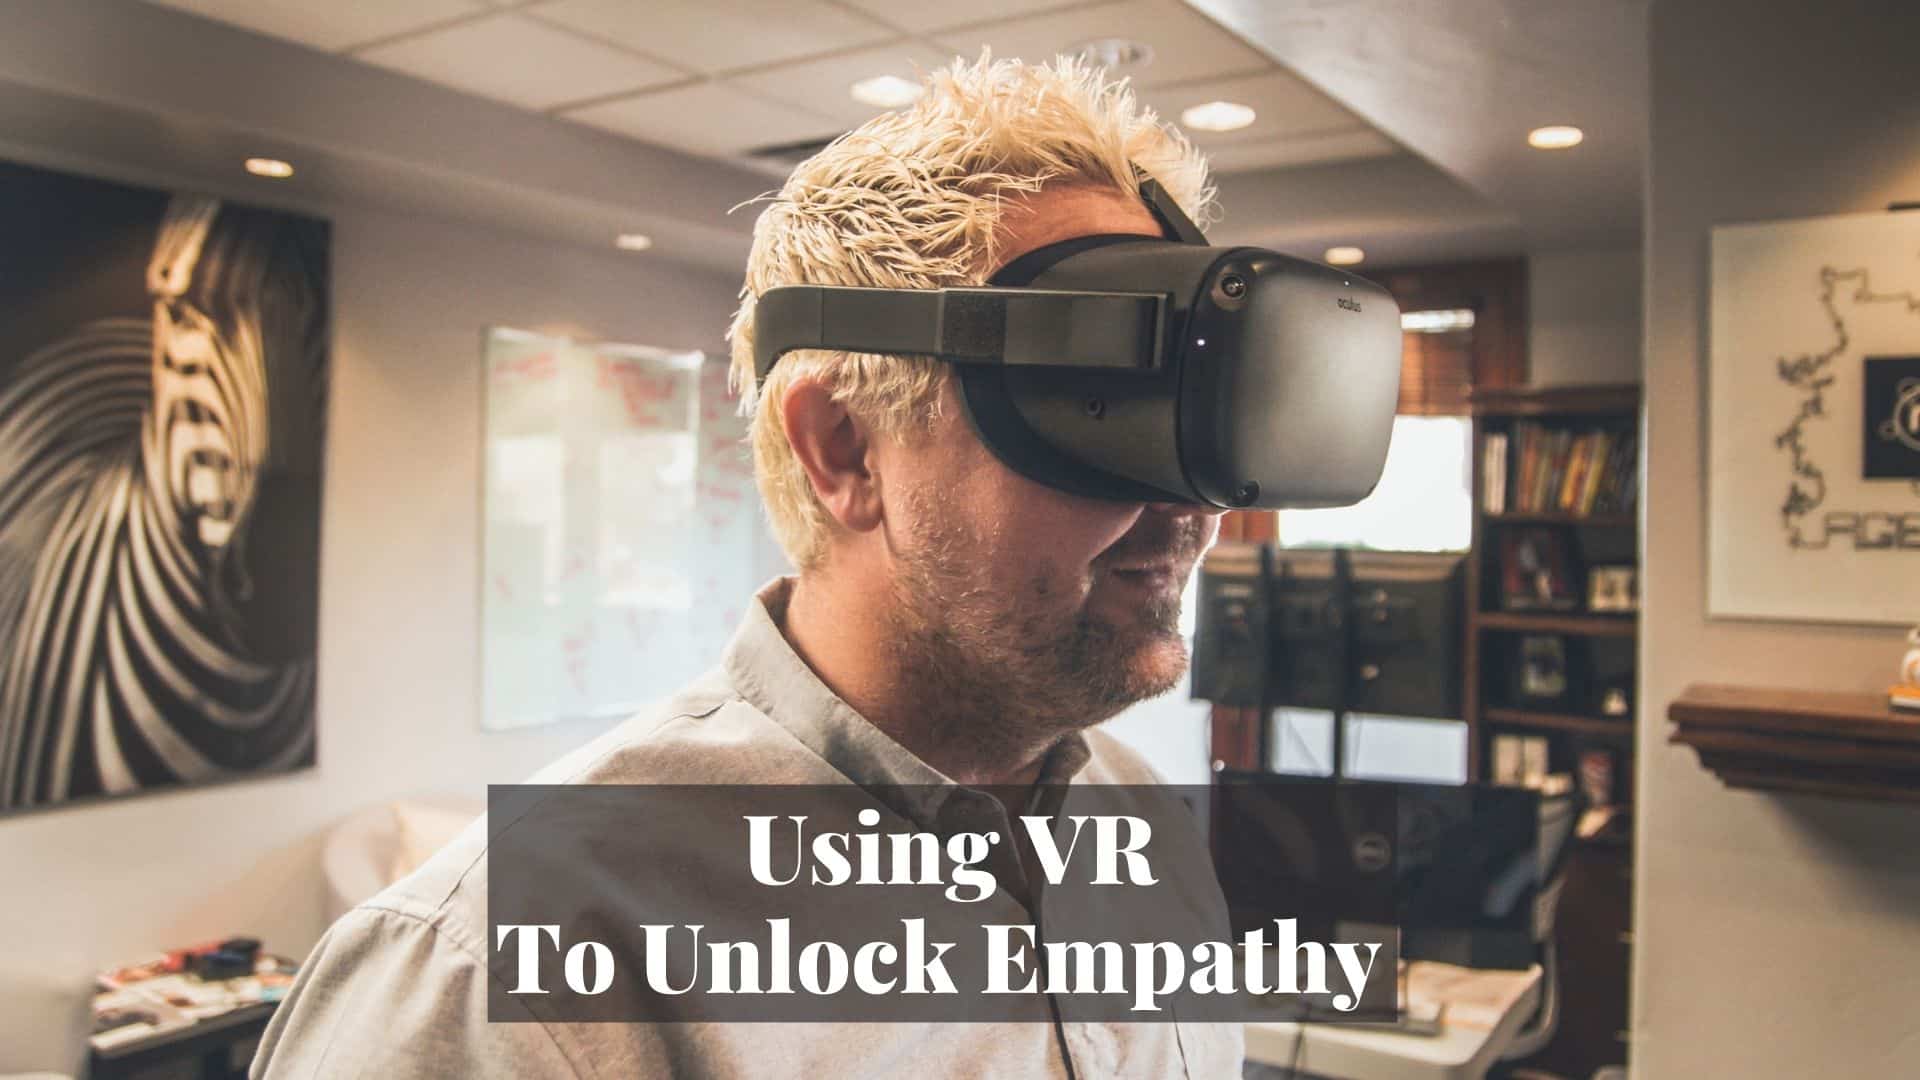 VR to unlock empathy